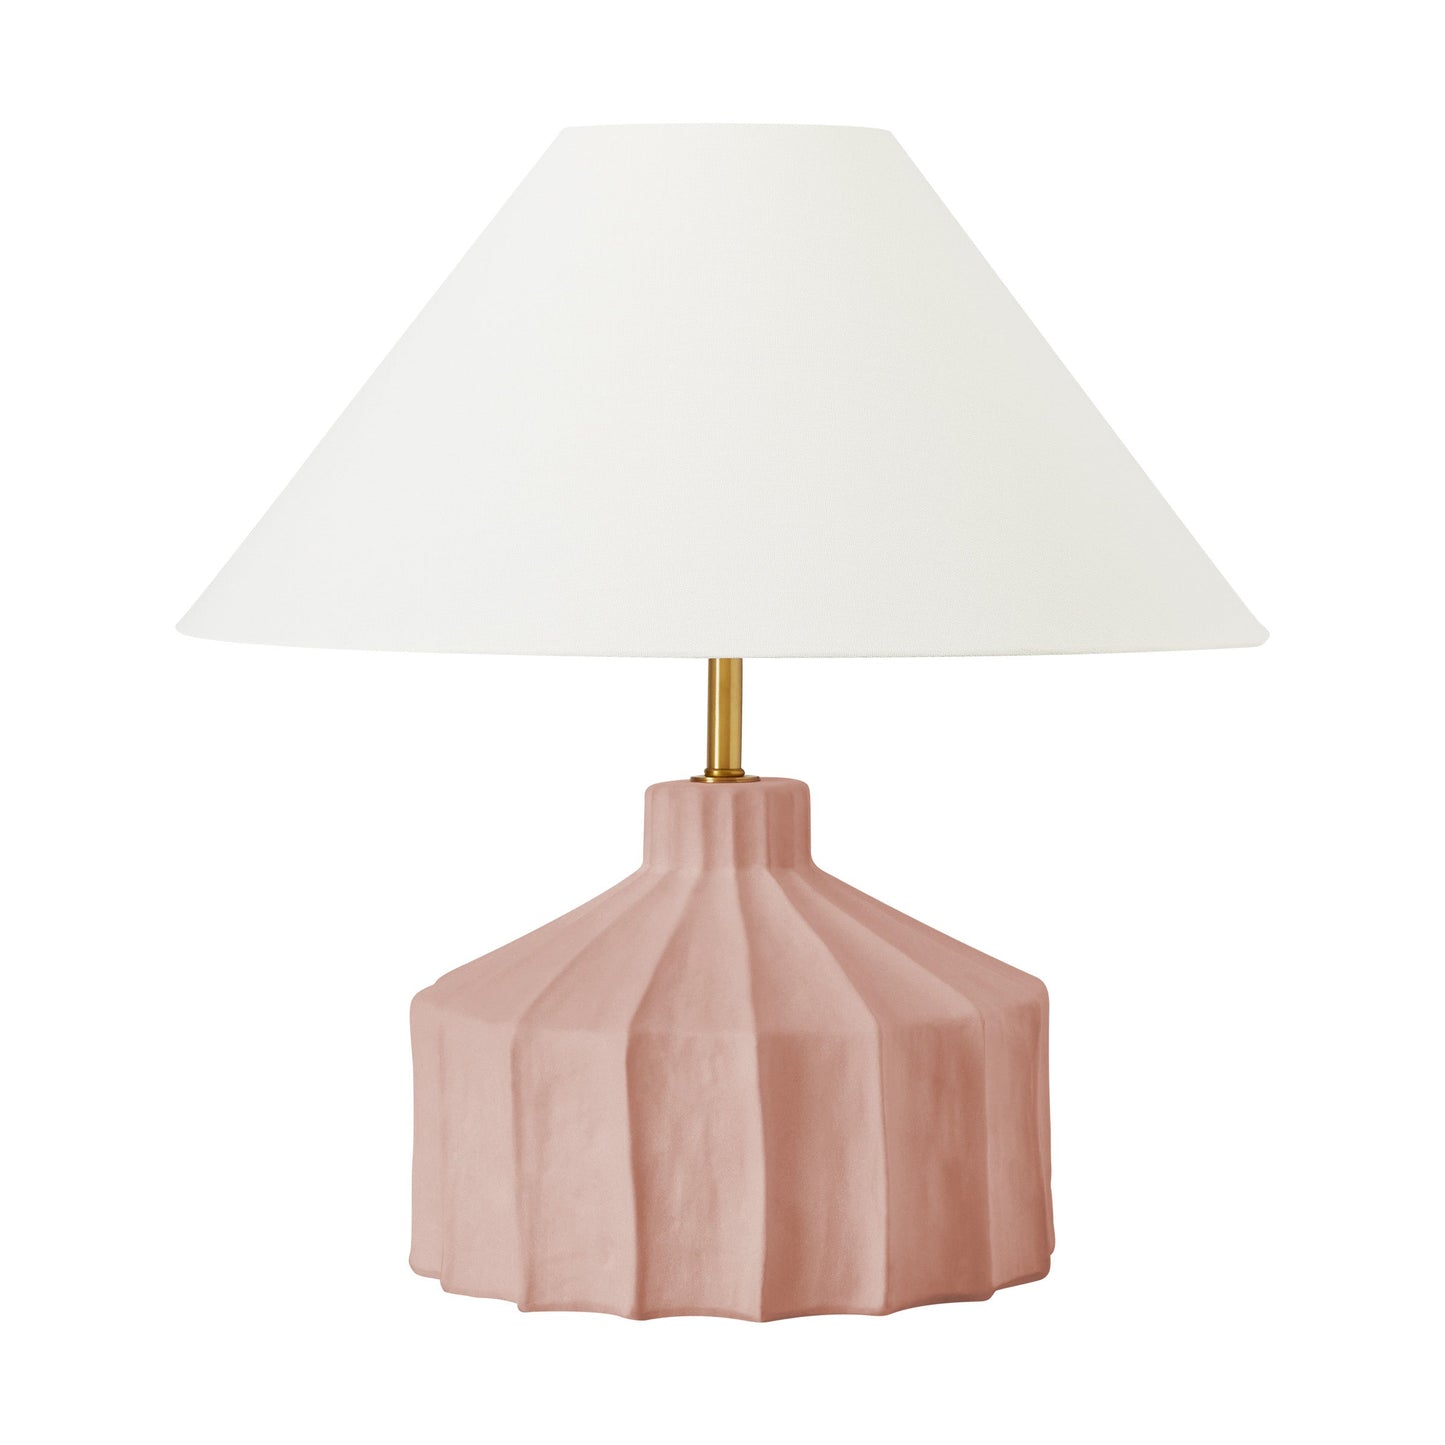 Kelly Wearstler Veneto Table Lamp